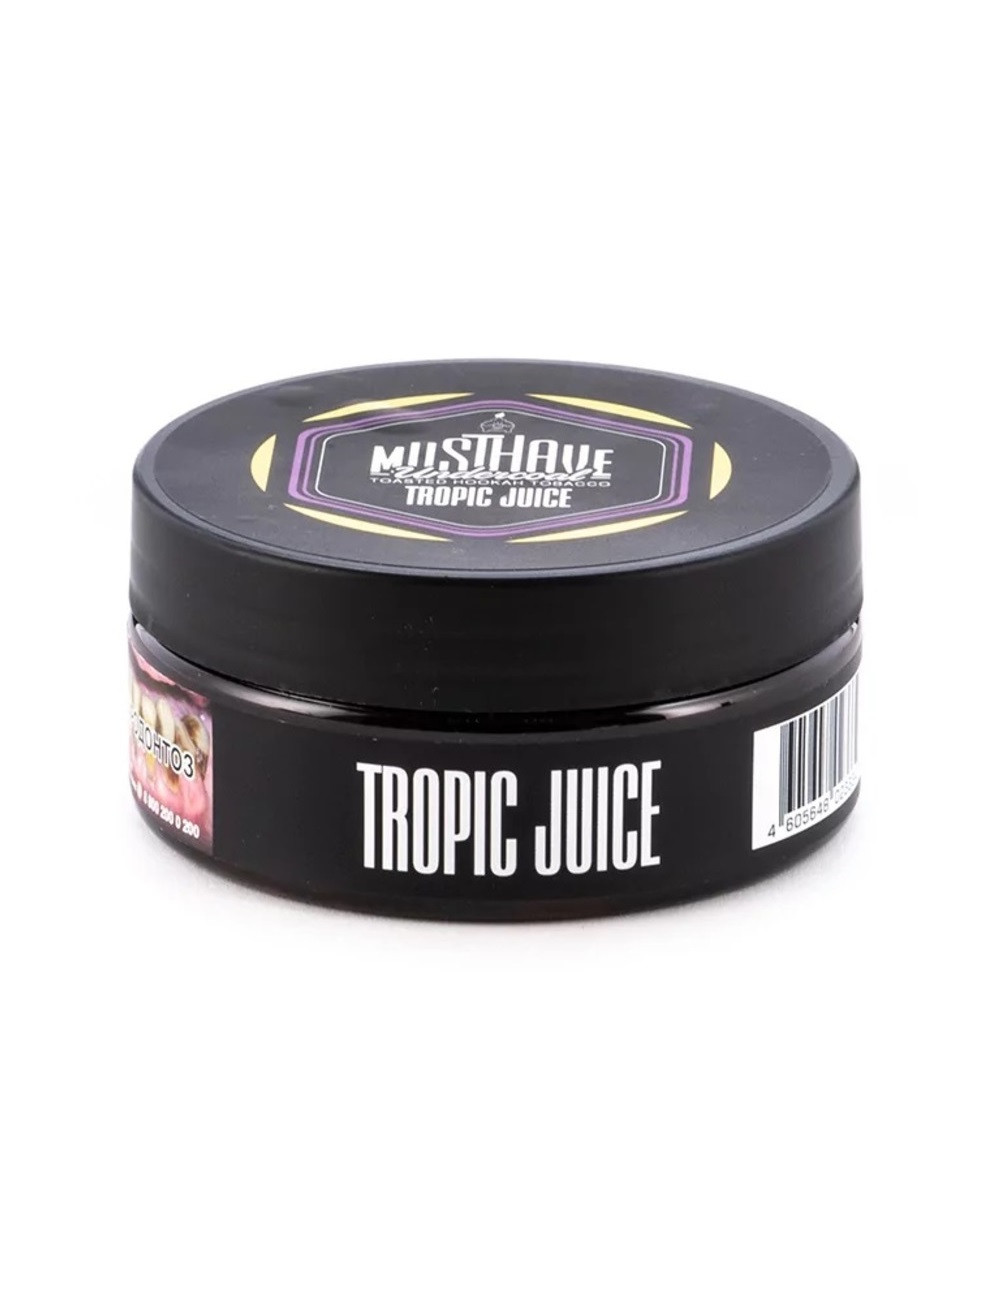 Tropic juice